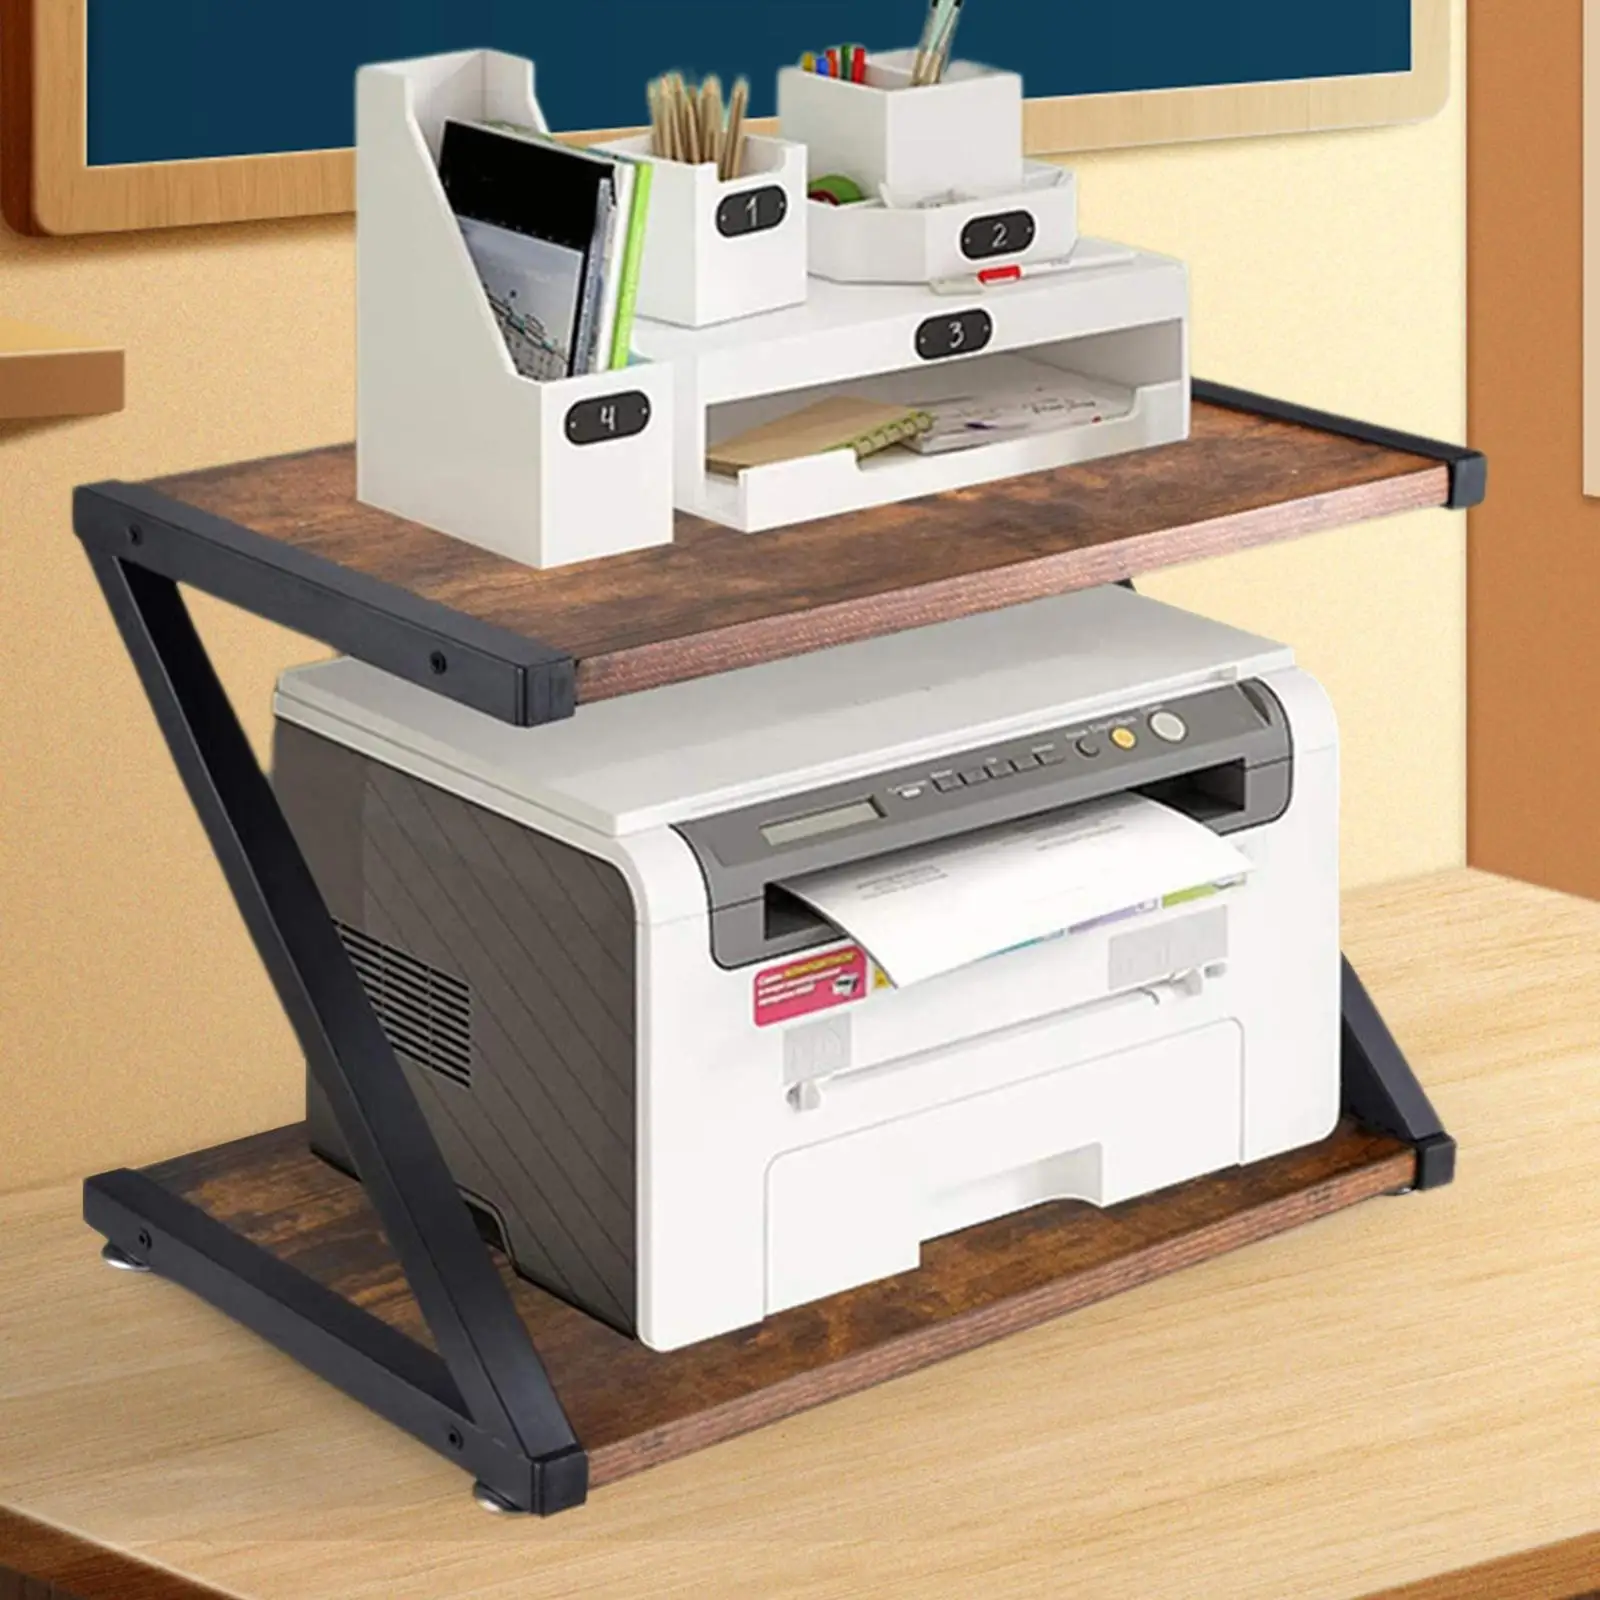 

Printer Copier Stand under Desk Shelf Heavy Duty Storage Shelf Wood 2 Tiers for Kitchen Room Office Tabletop Scanner